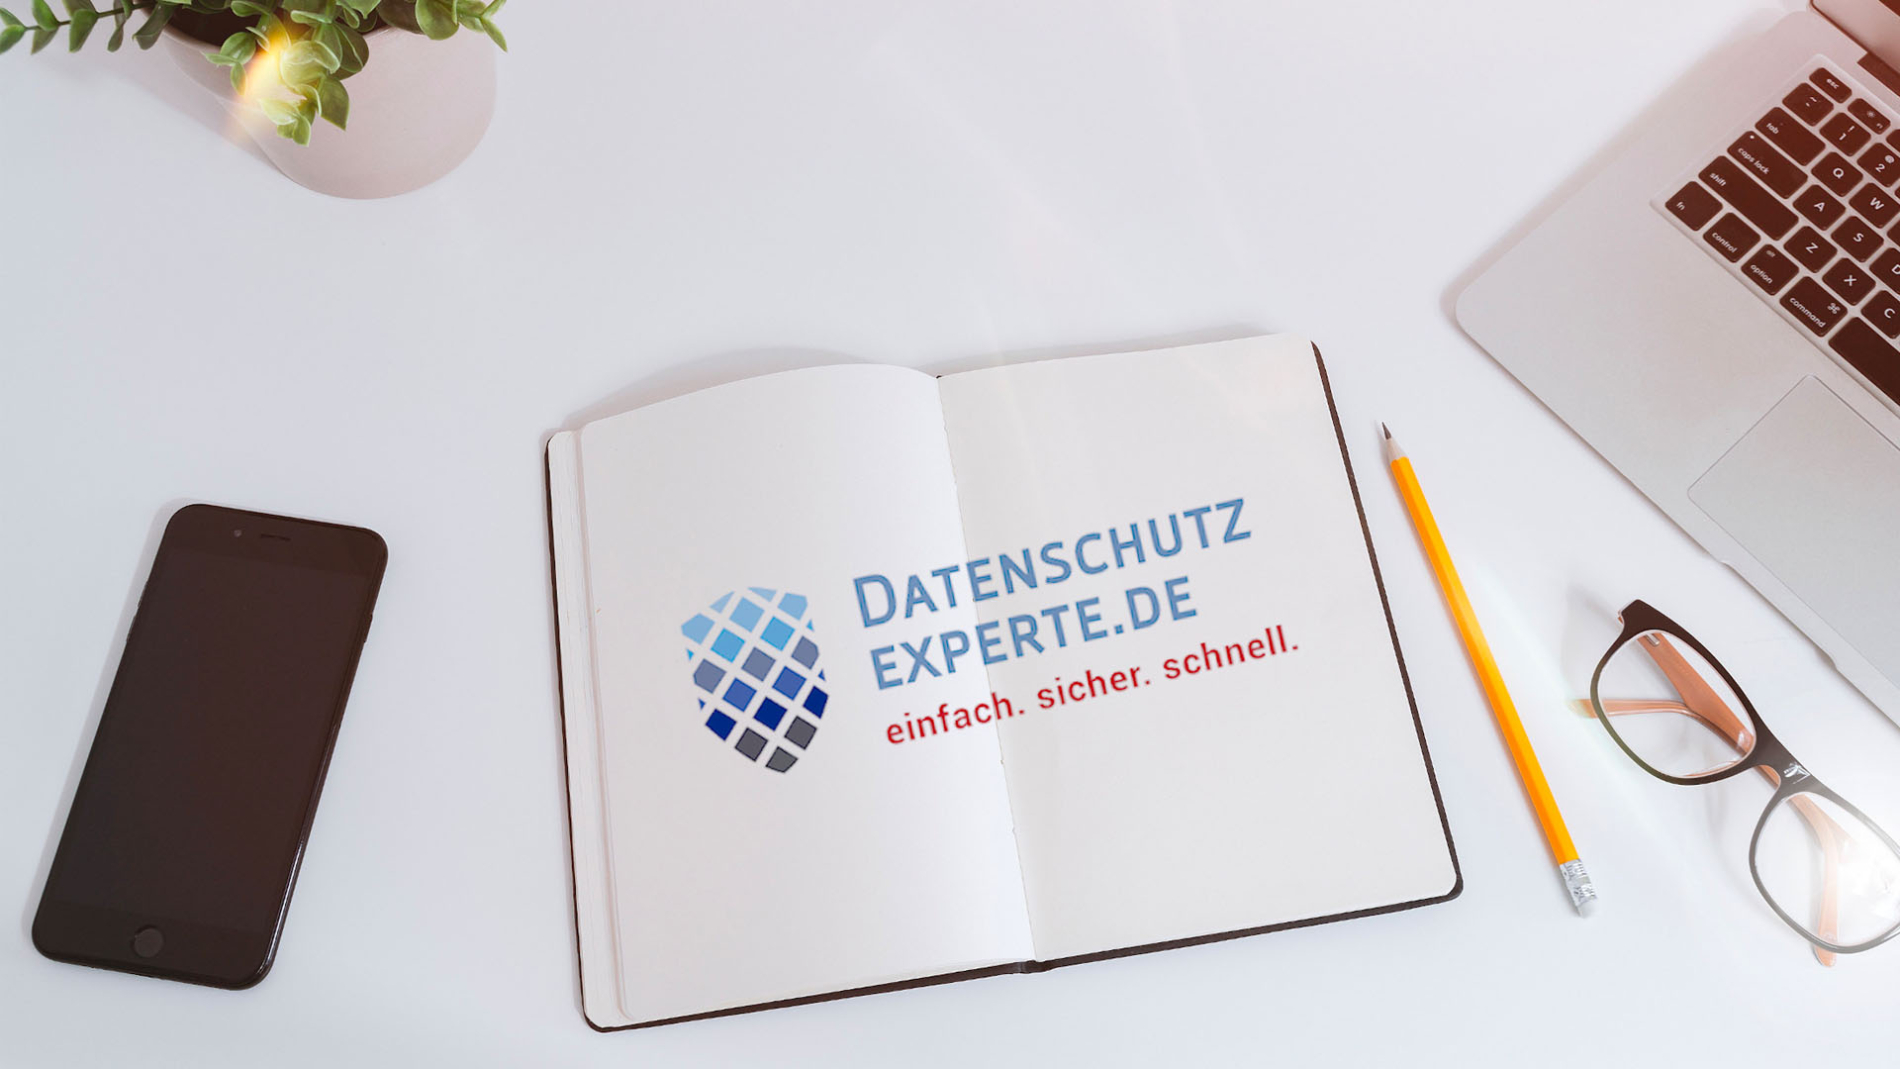 Partnership with Datenschutz Experte